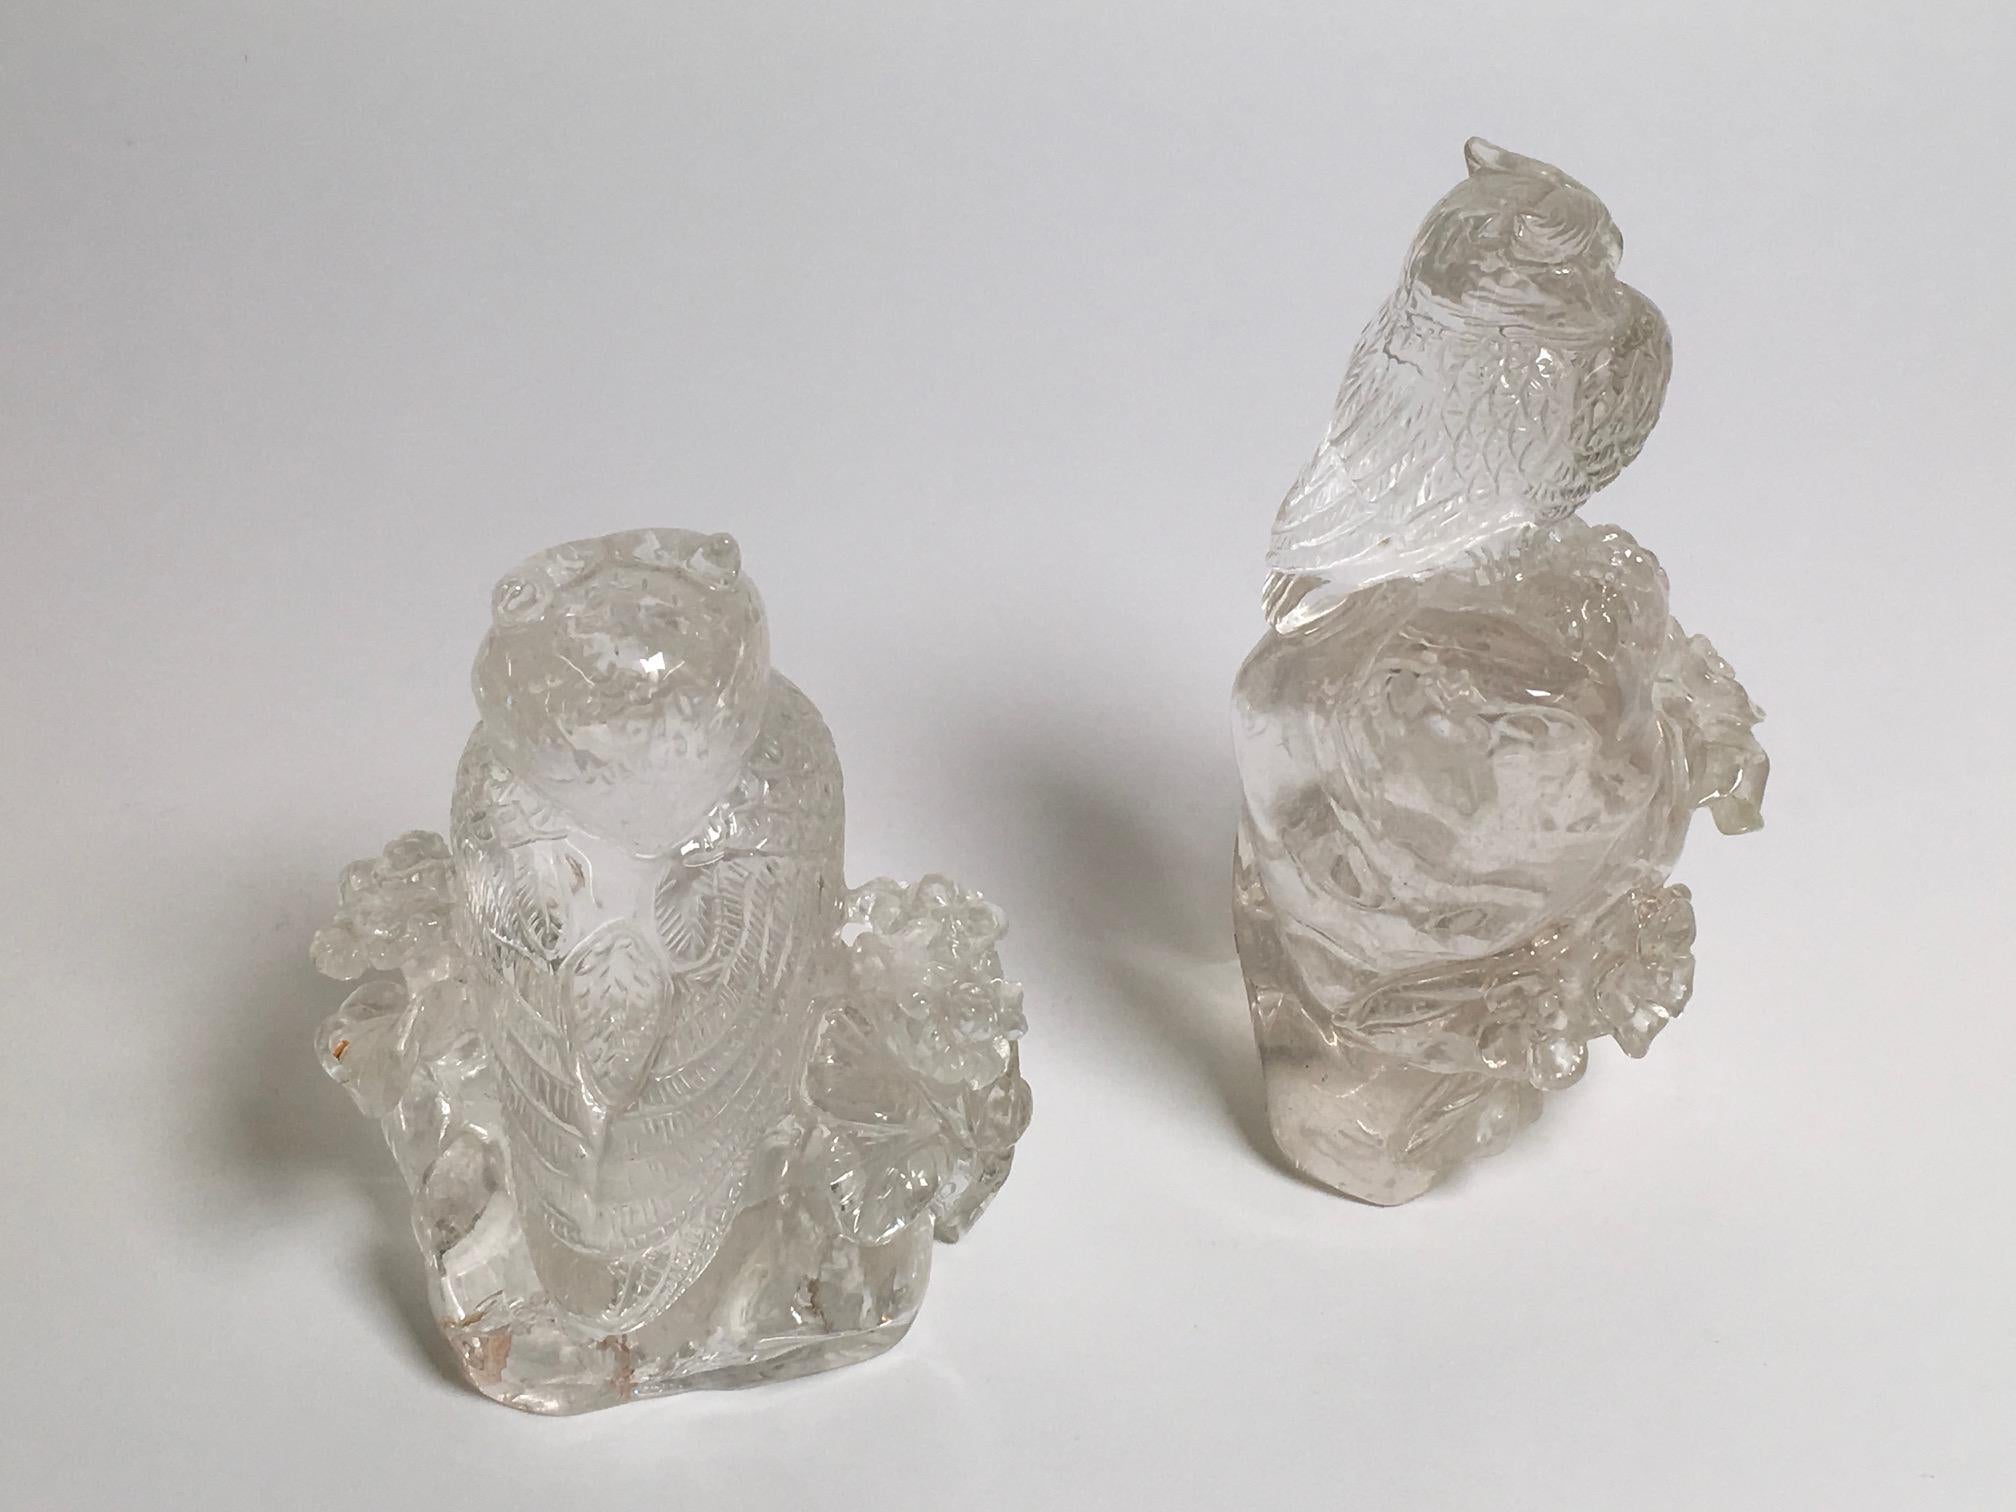 Cristal de roche Magnifiques sculptures en quartz Hyaline et cristal de roche sculptées en vente